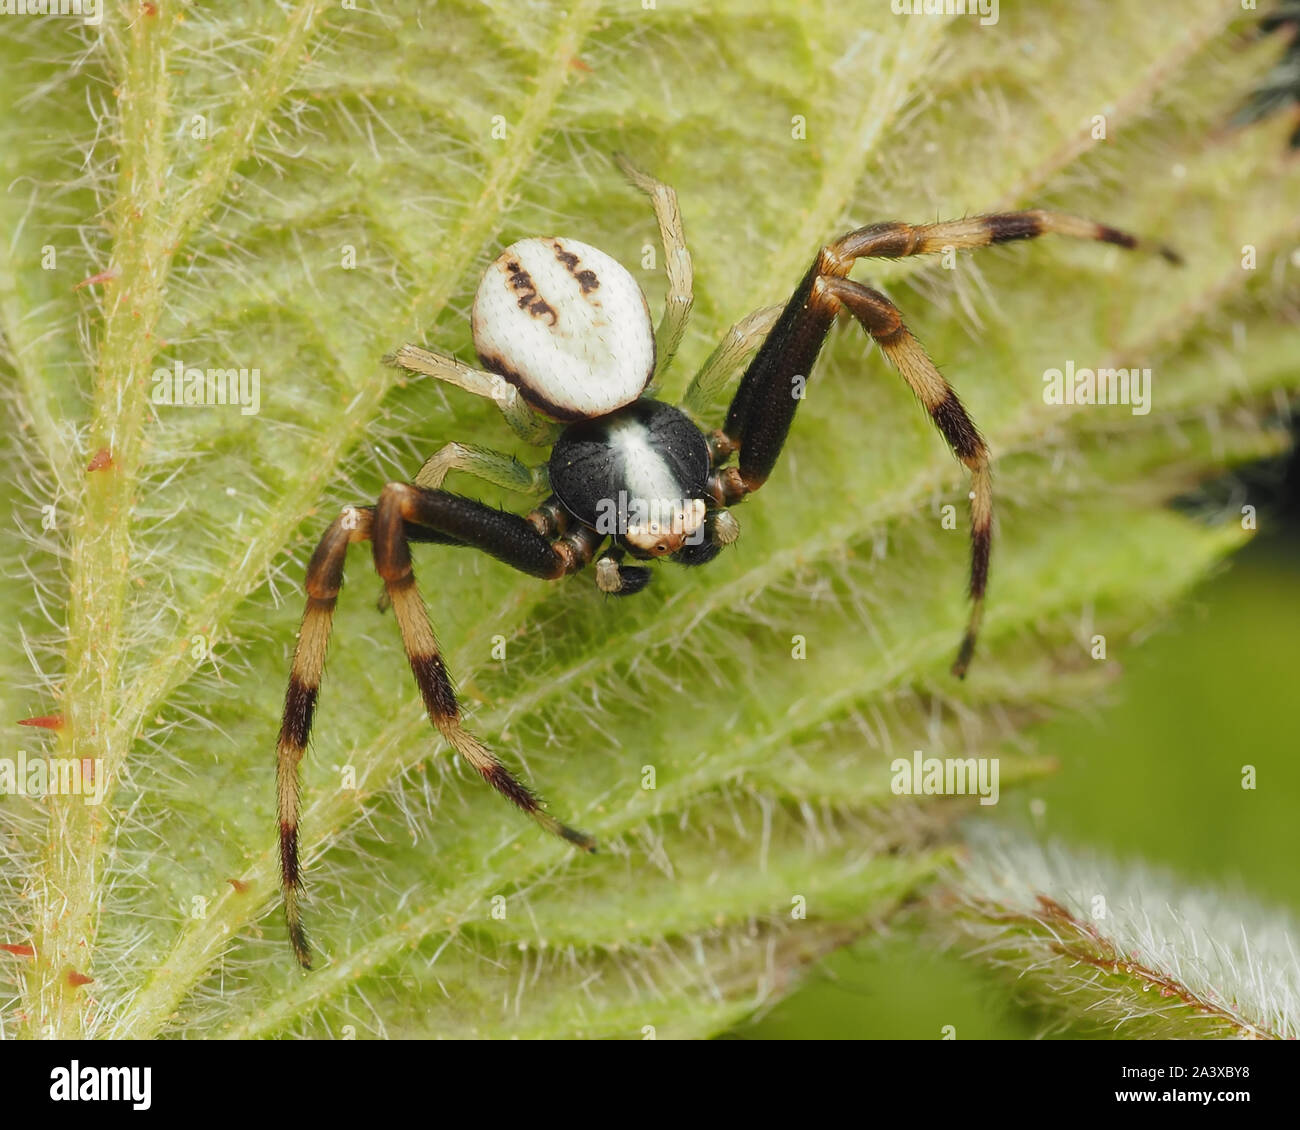 Male Misumena vatia crab spider at rest on bramble leaf. Tipperary, Ireland Stock Photo